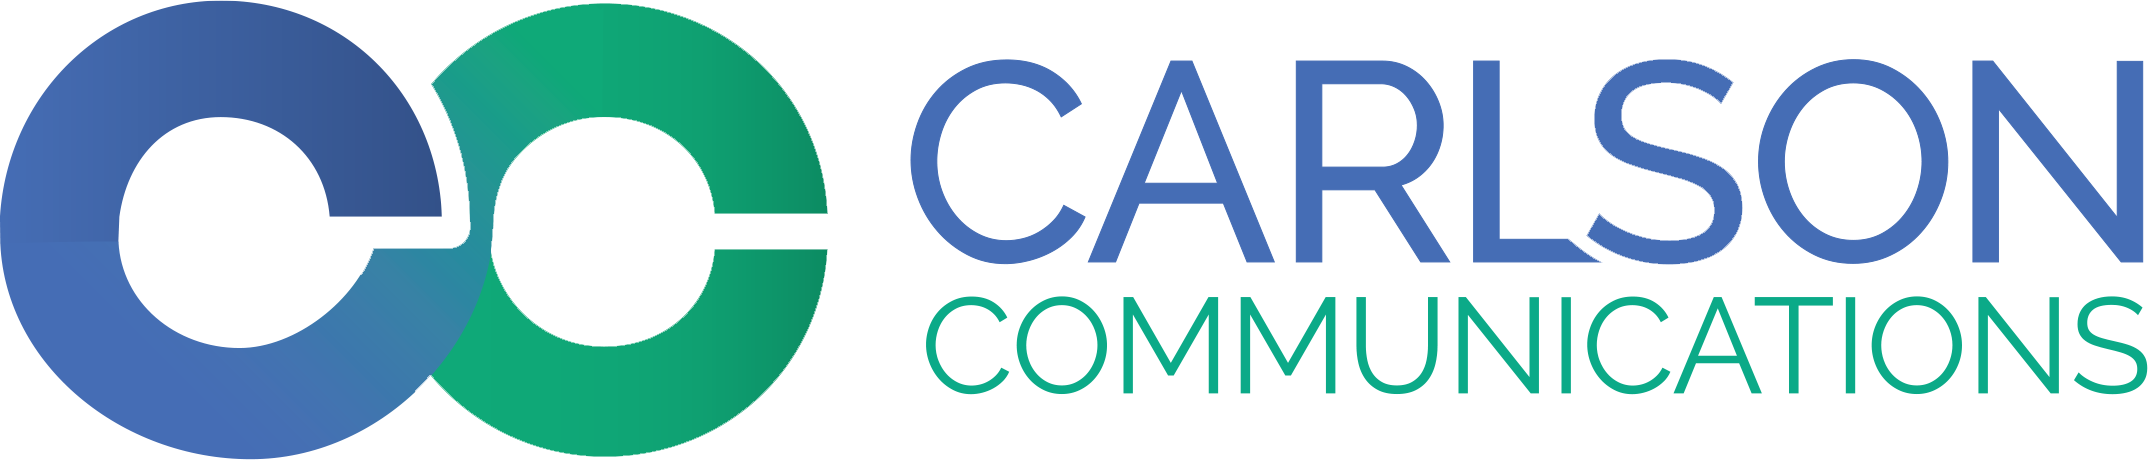 Carlson Communications